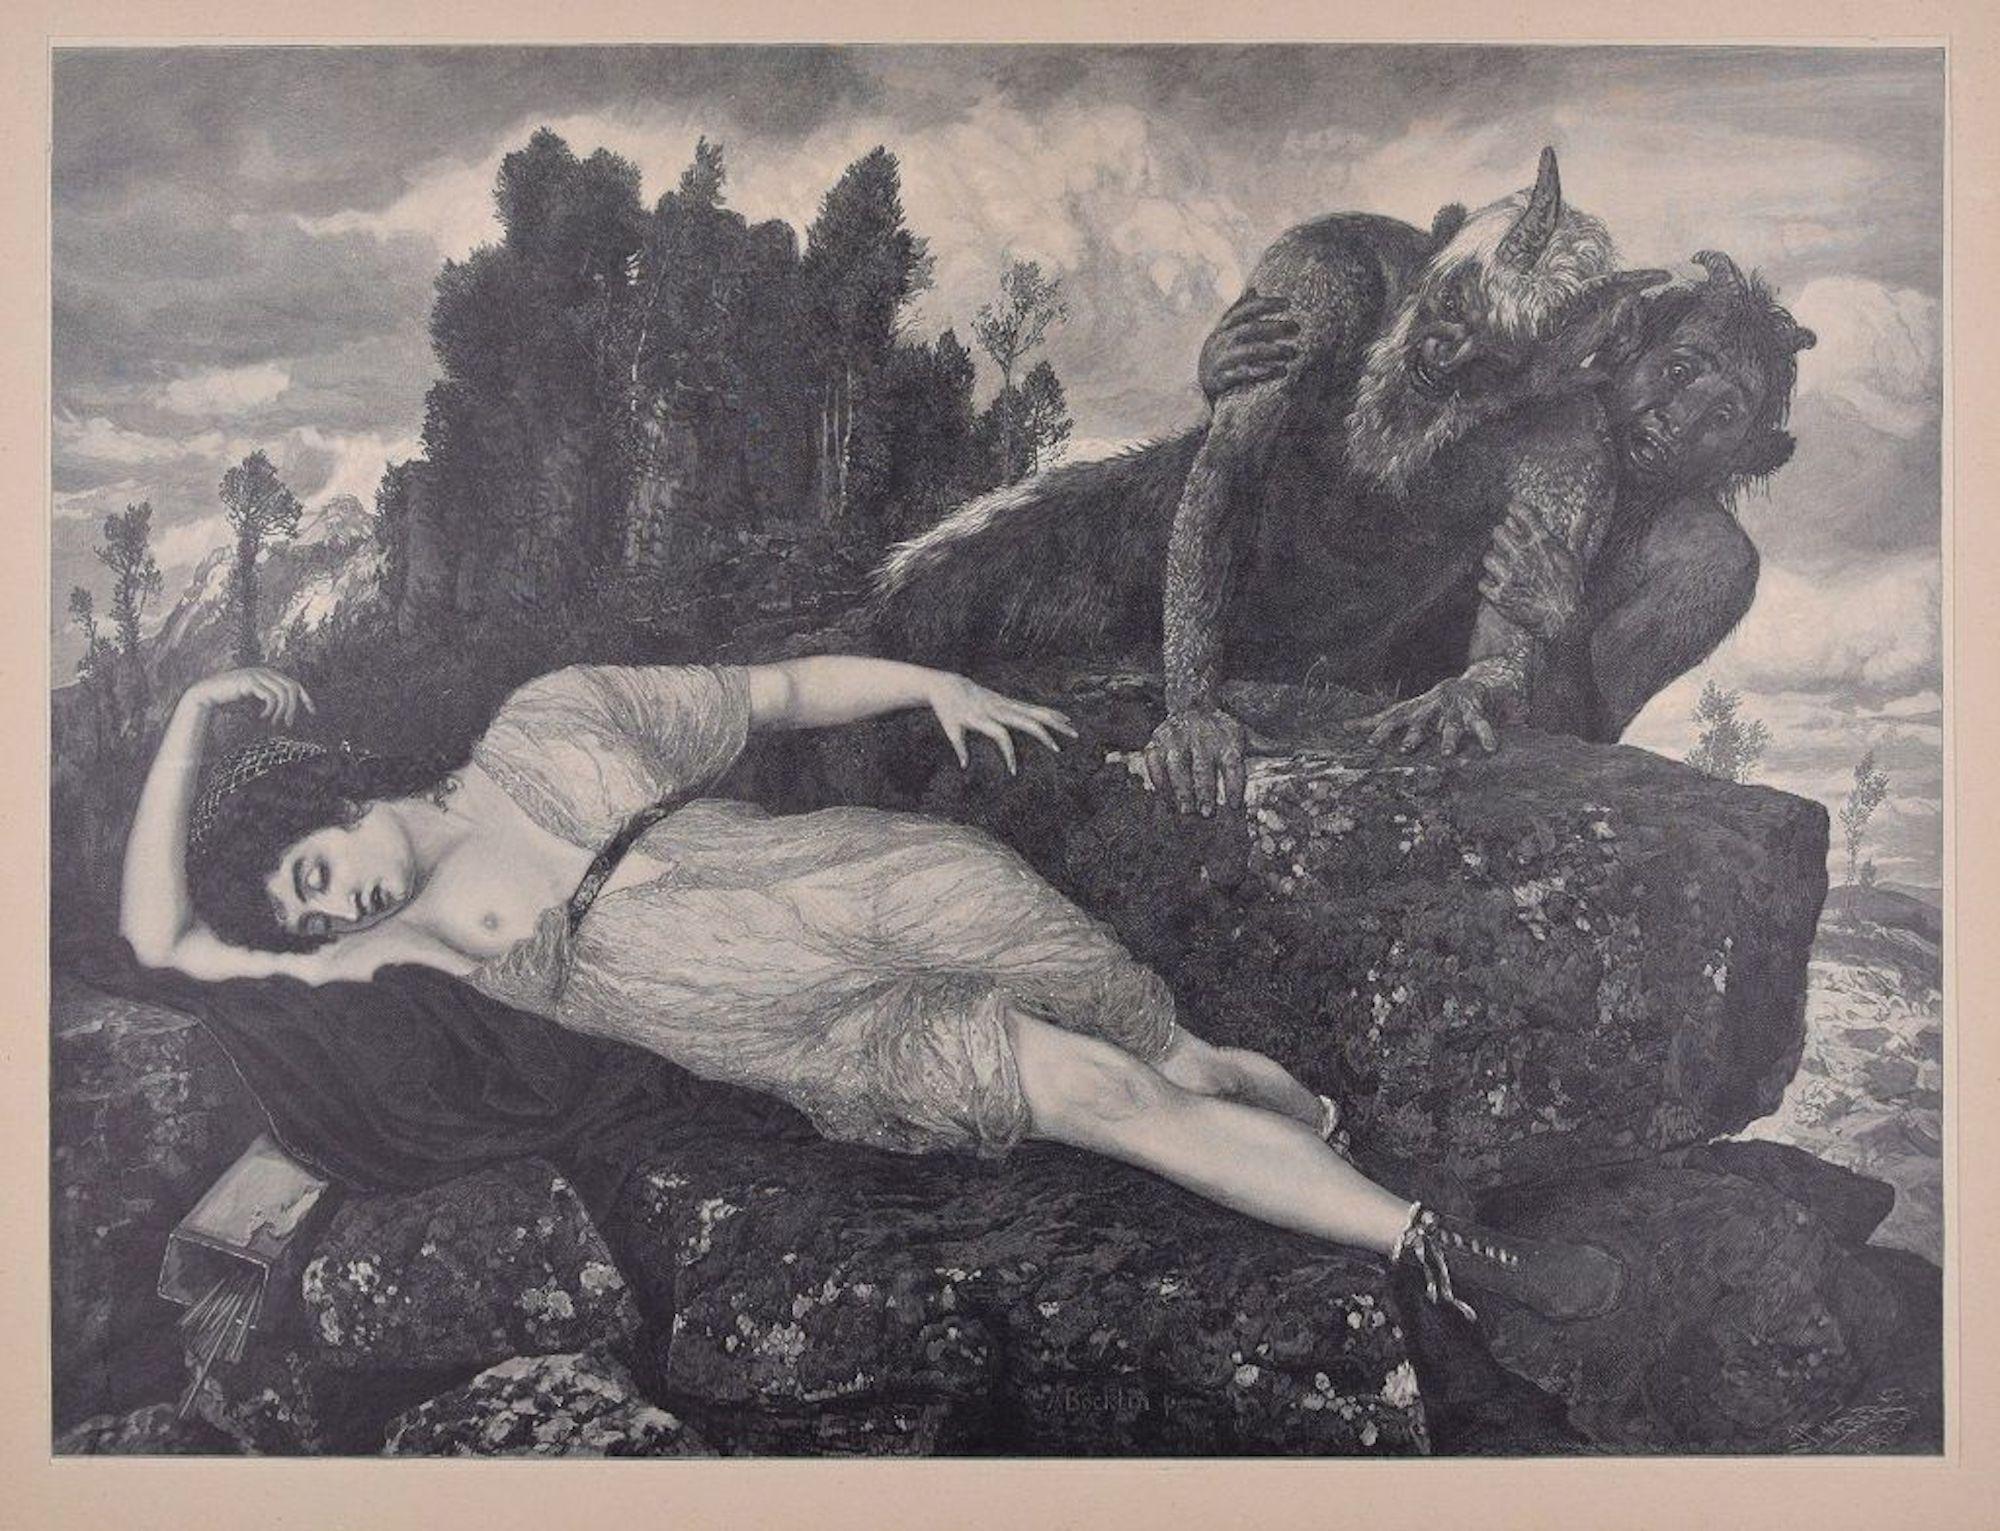 Sleeping Diana - Original Woodcut by J.J. Weber - 1898